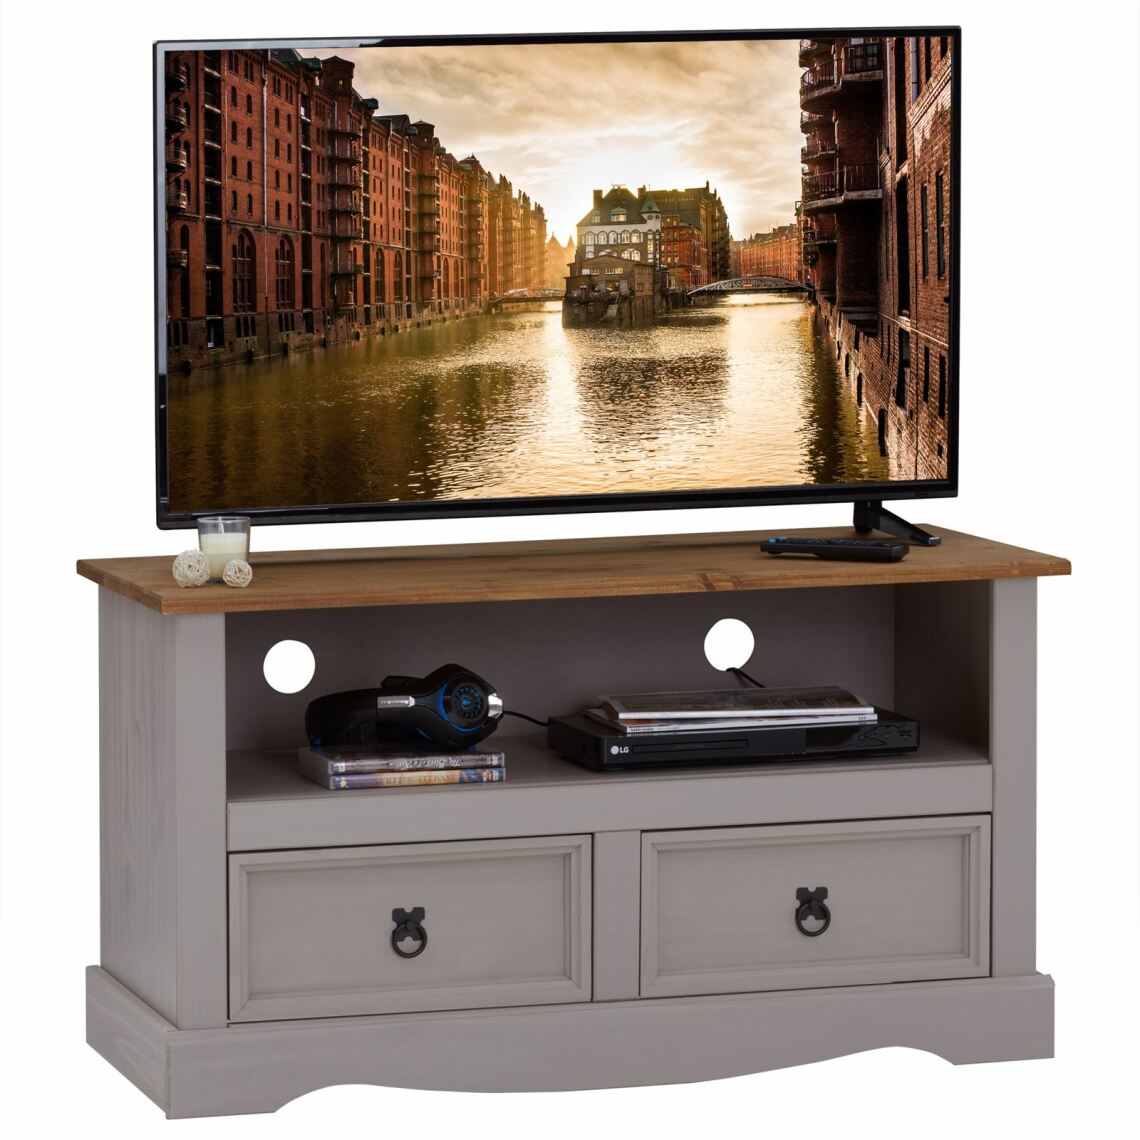 Idimex - Meuble TV RAMON avec 2 tiroirs, style mexicain en pin massif gris et brun - Meubles TV, Hi-Fi